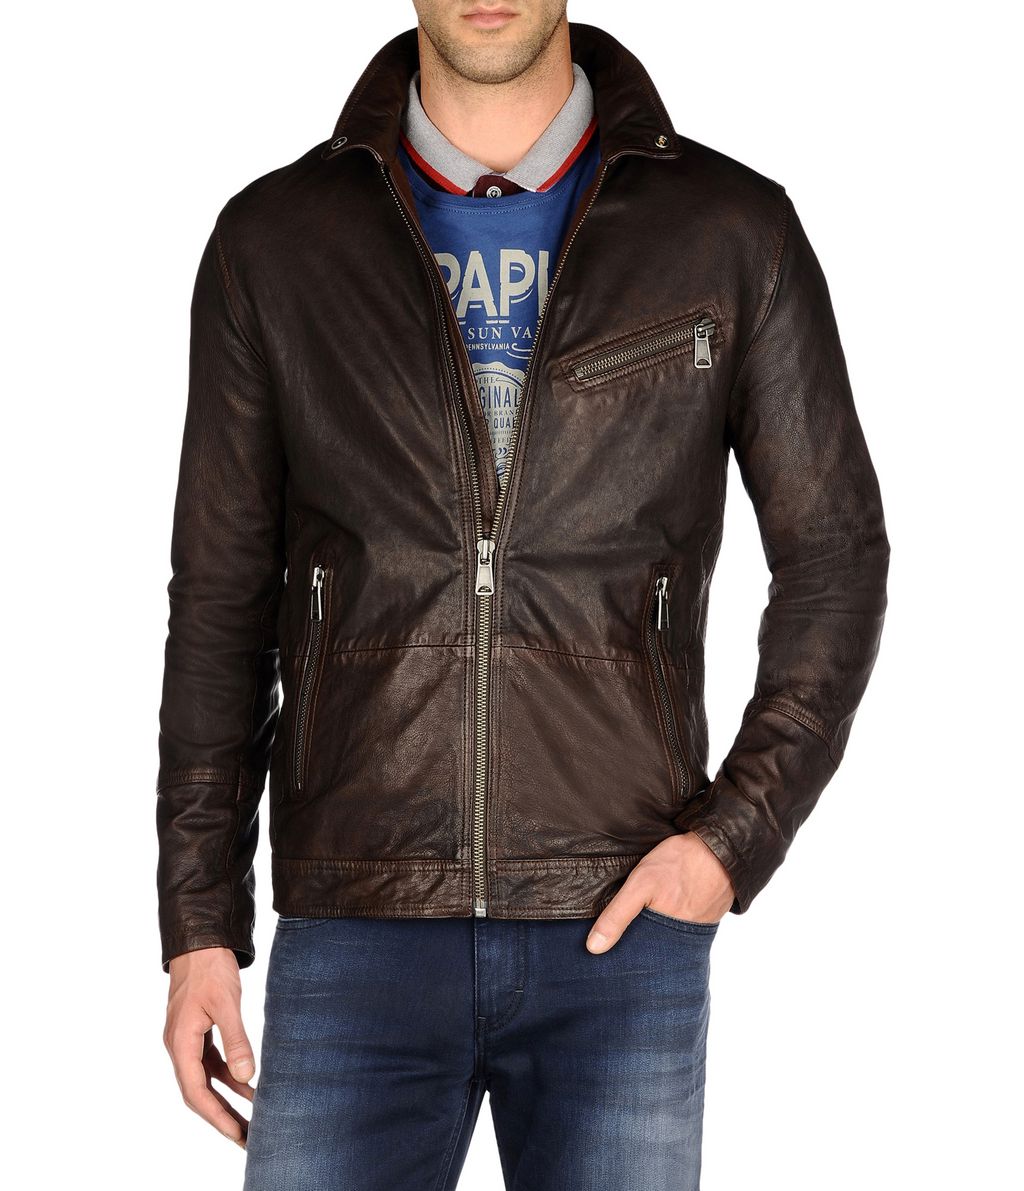 Napapijri ADAIR Leather Jacket Men | Napapijri Online Store